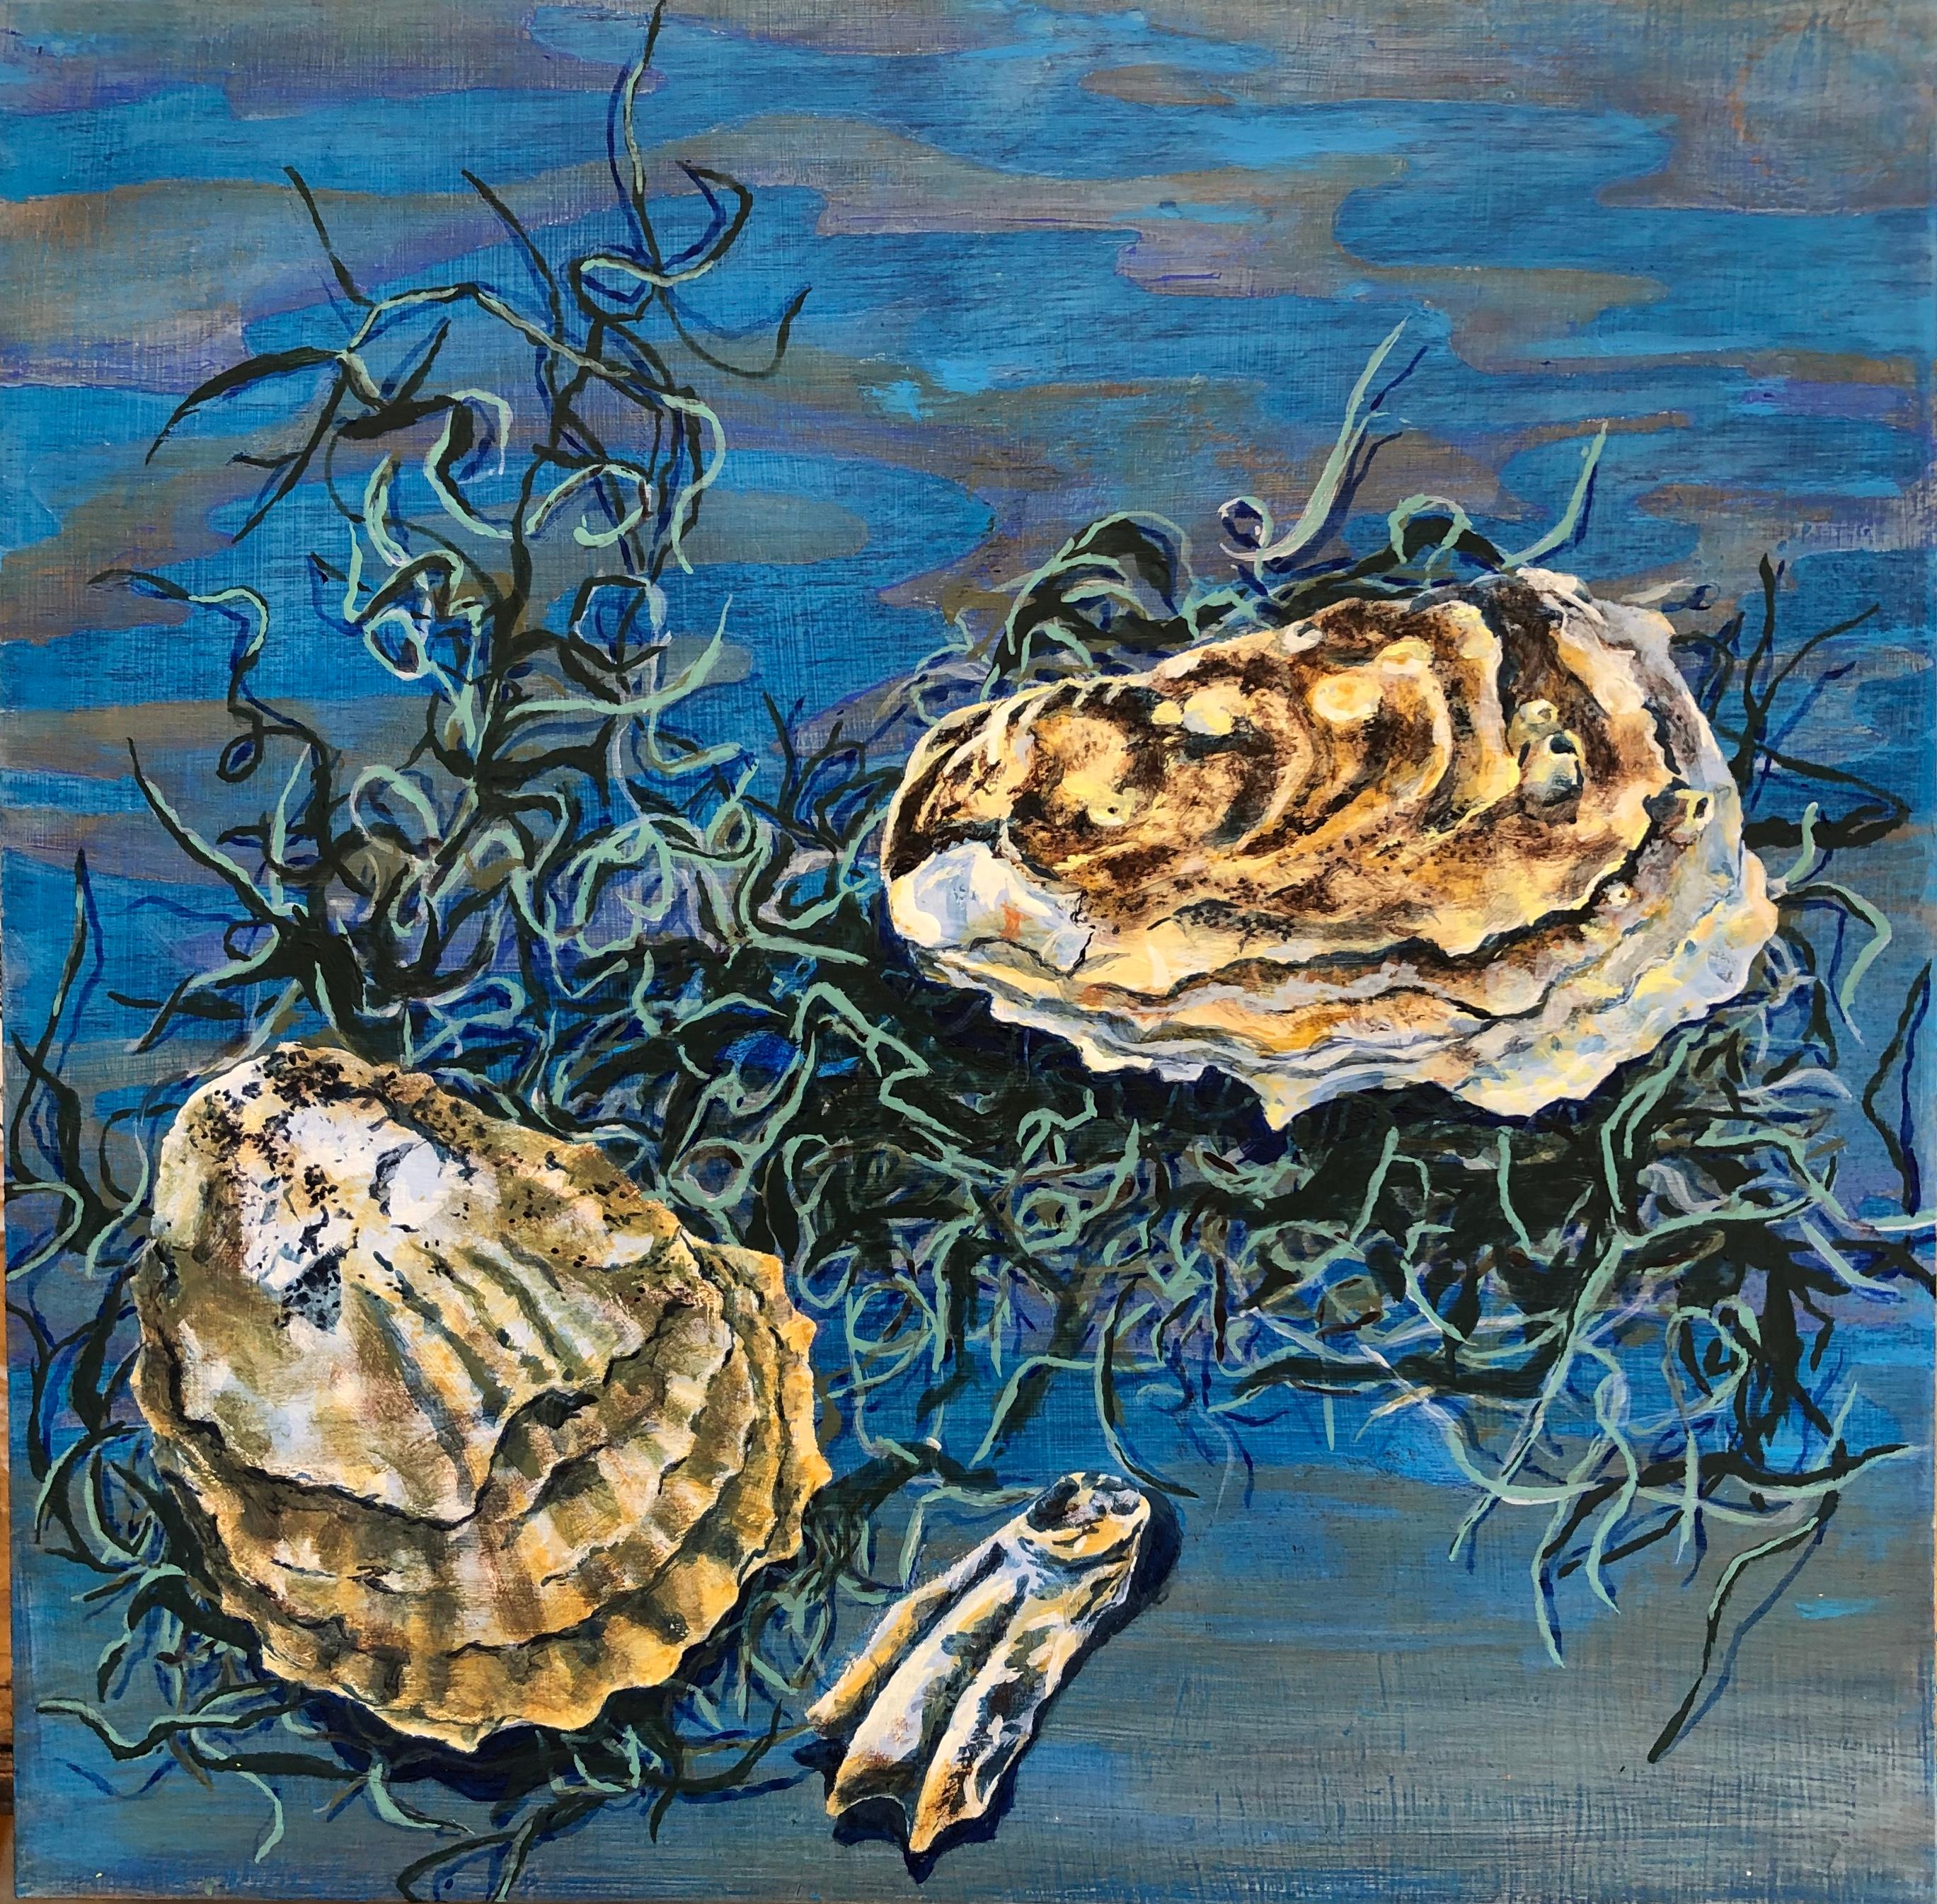 Denise Mumm Still-Life Painting - South Carolina Oysters and Spanish Moss, Acrylic Painting on Wood Panel, 2020